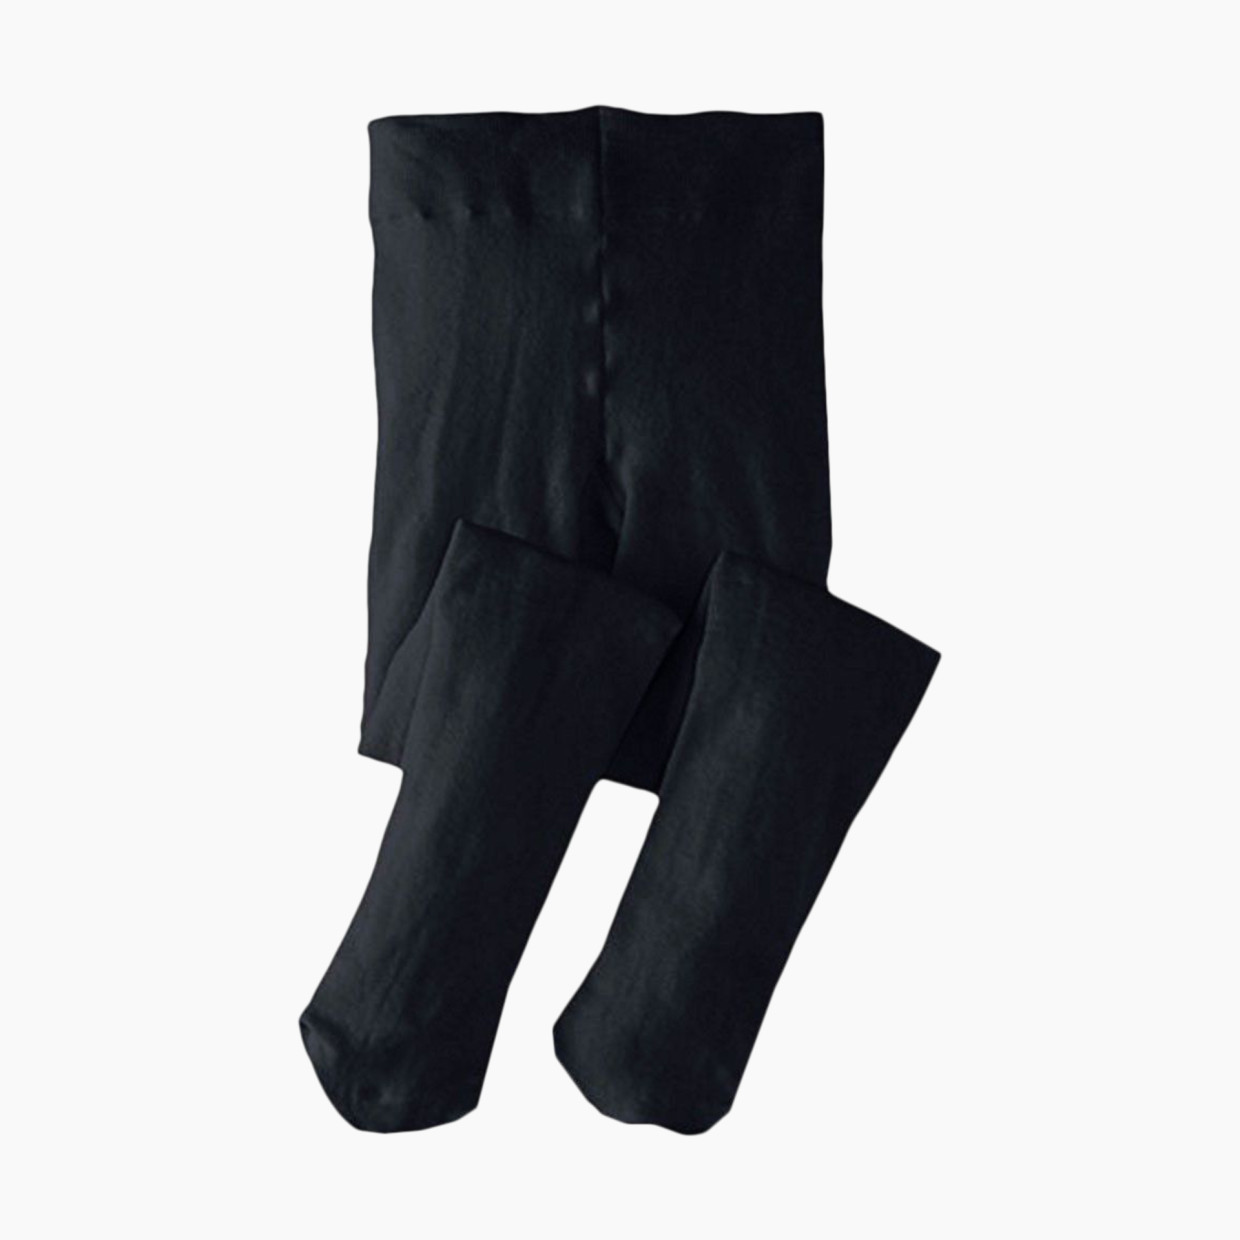 Jefferies Socks Pima Cotton Tights - Black, 0-6 Months.